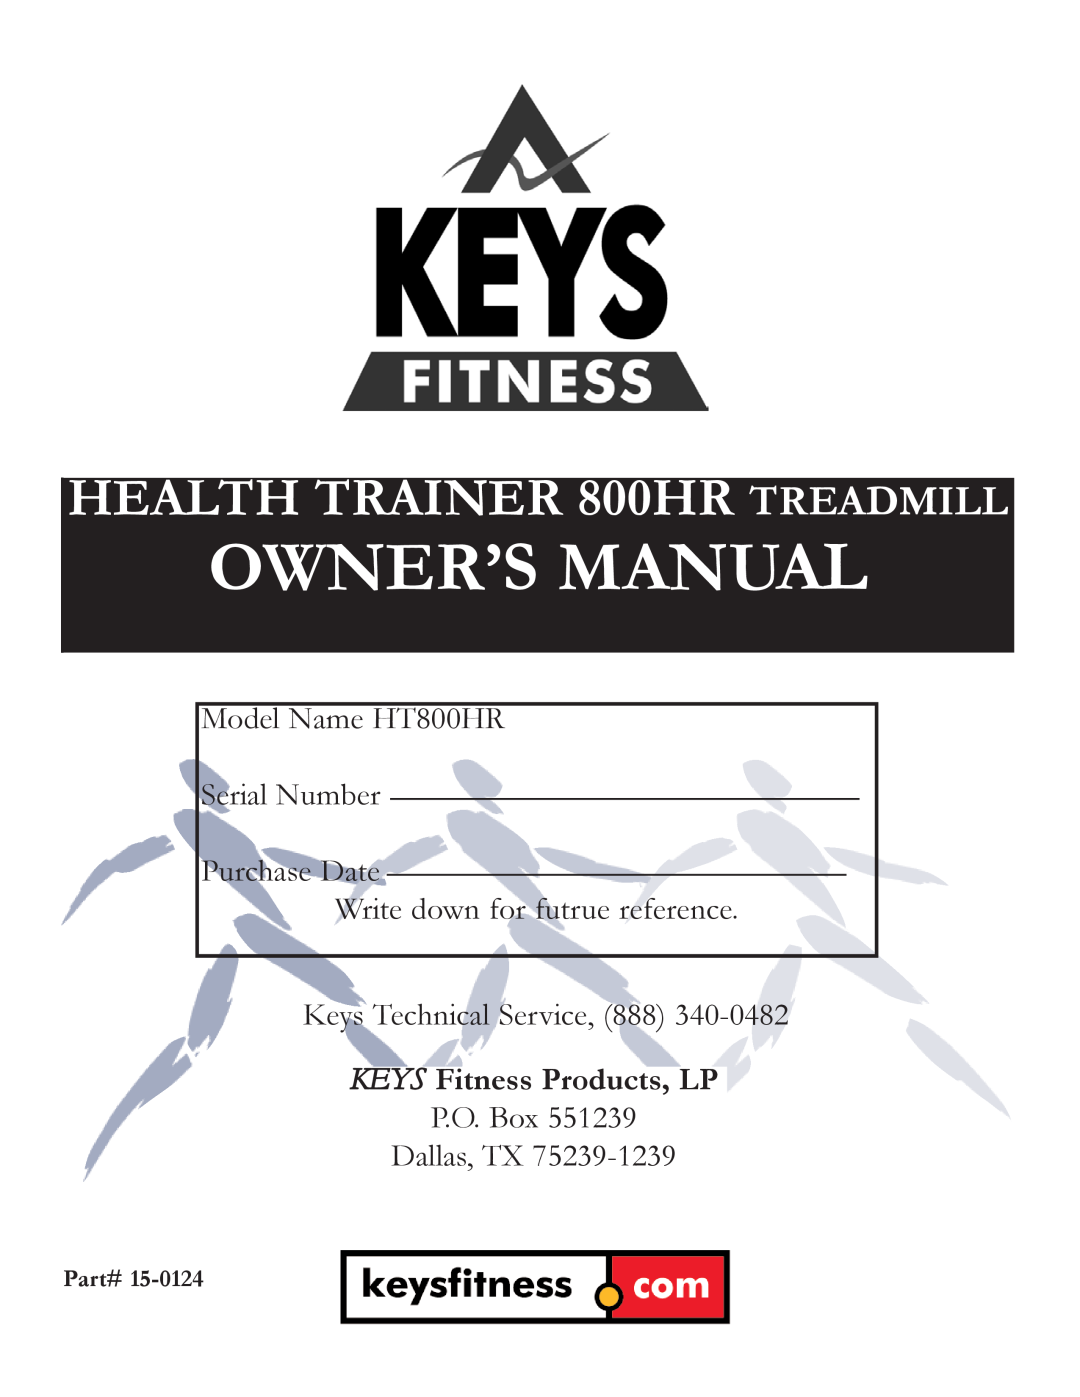 Keys Fitness HT800HR owner manual HEALTH TRAINER 800HR TREADMILL, KEYS Fitness Products, LP, Part# 